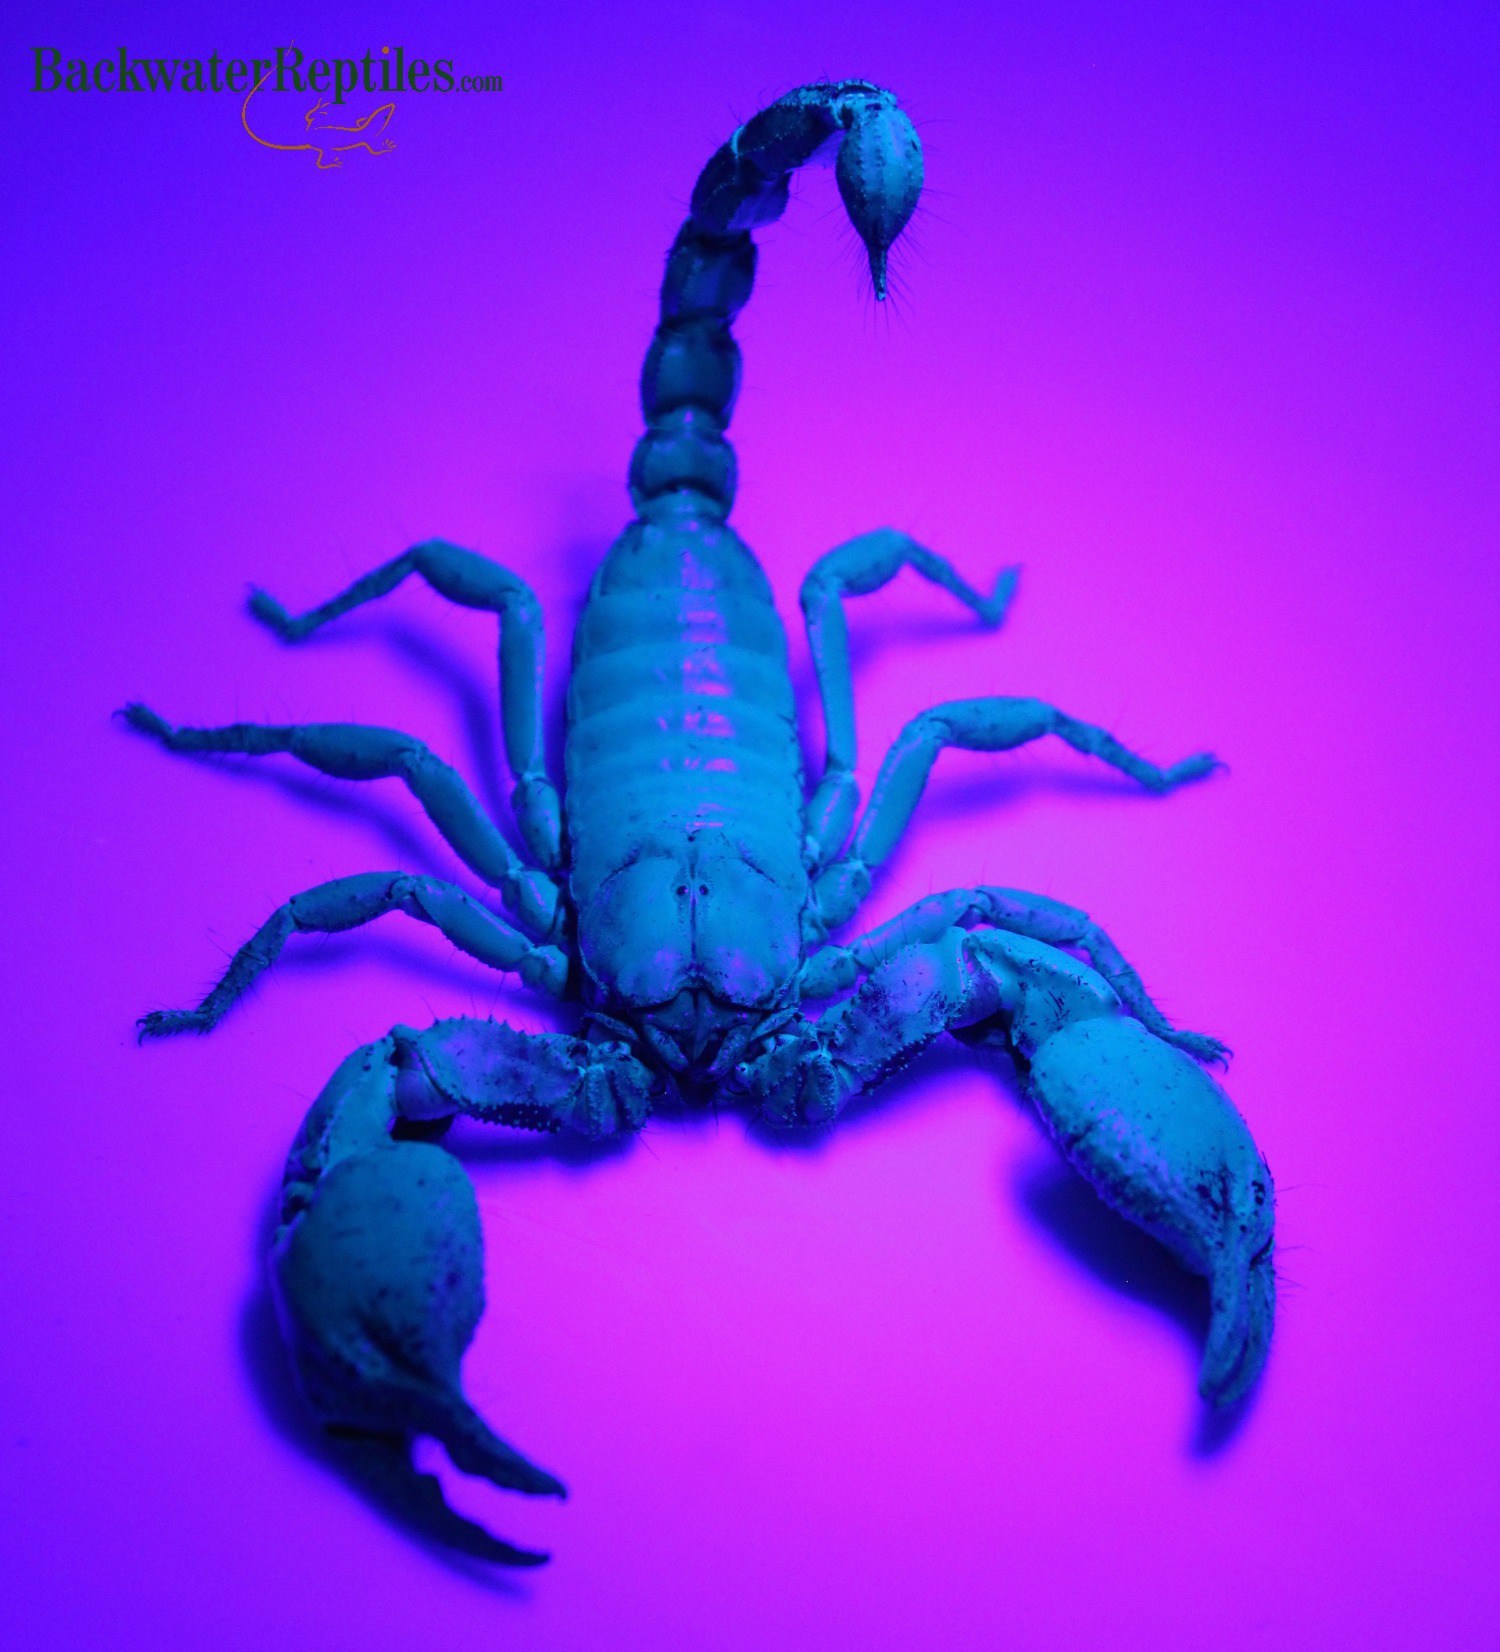 Do Scorpions Glow in the Dark?